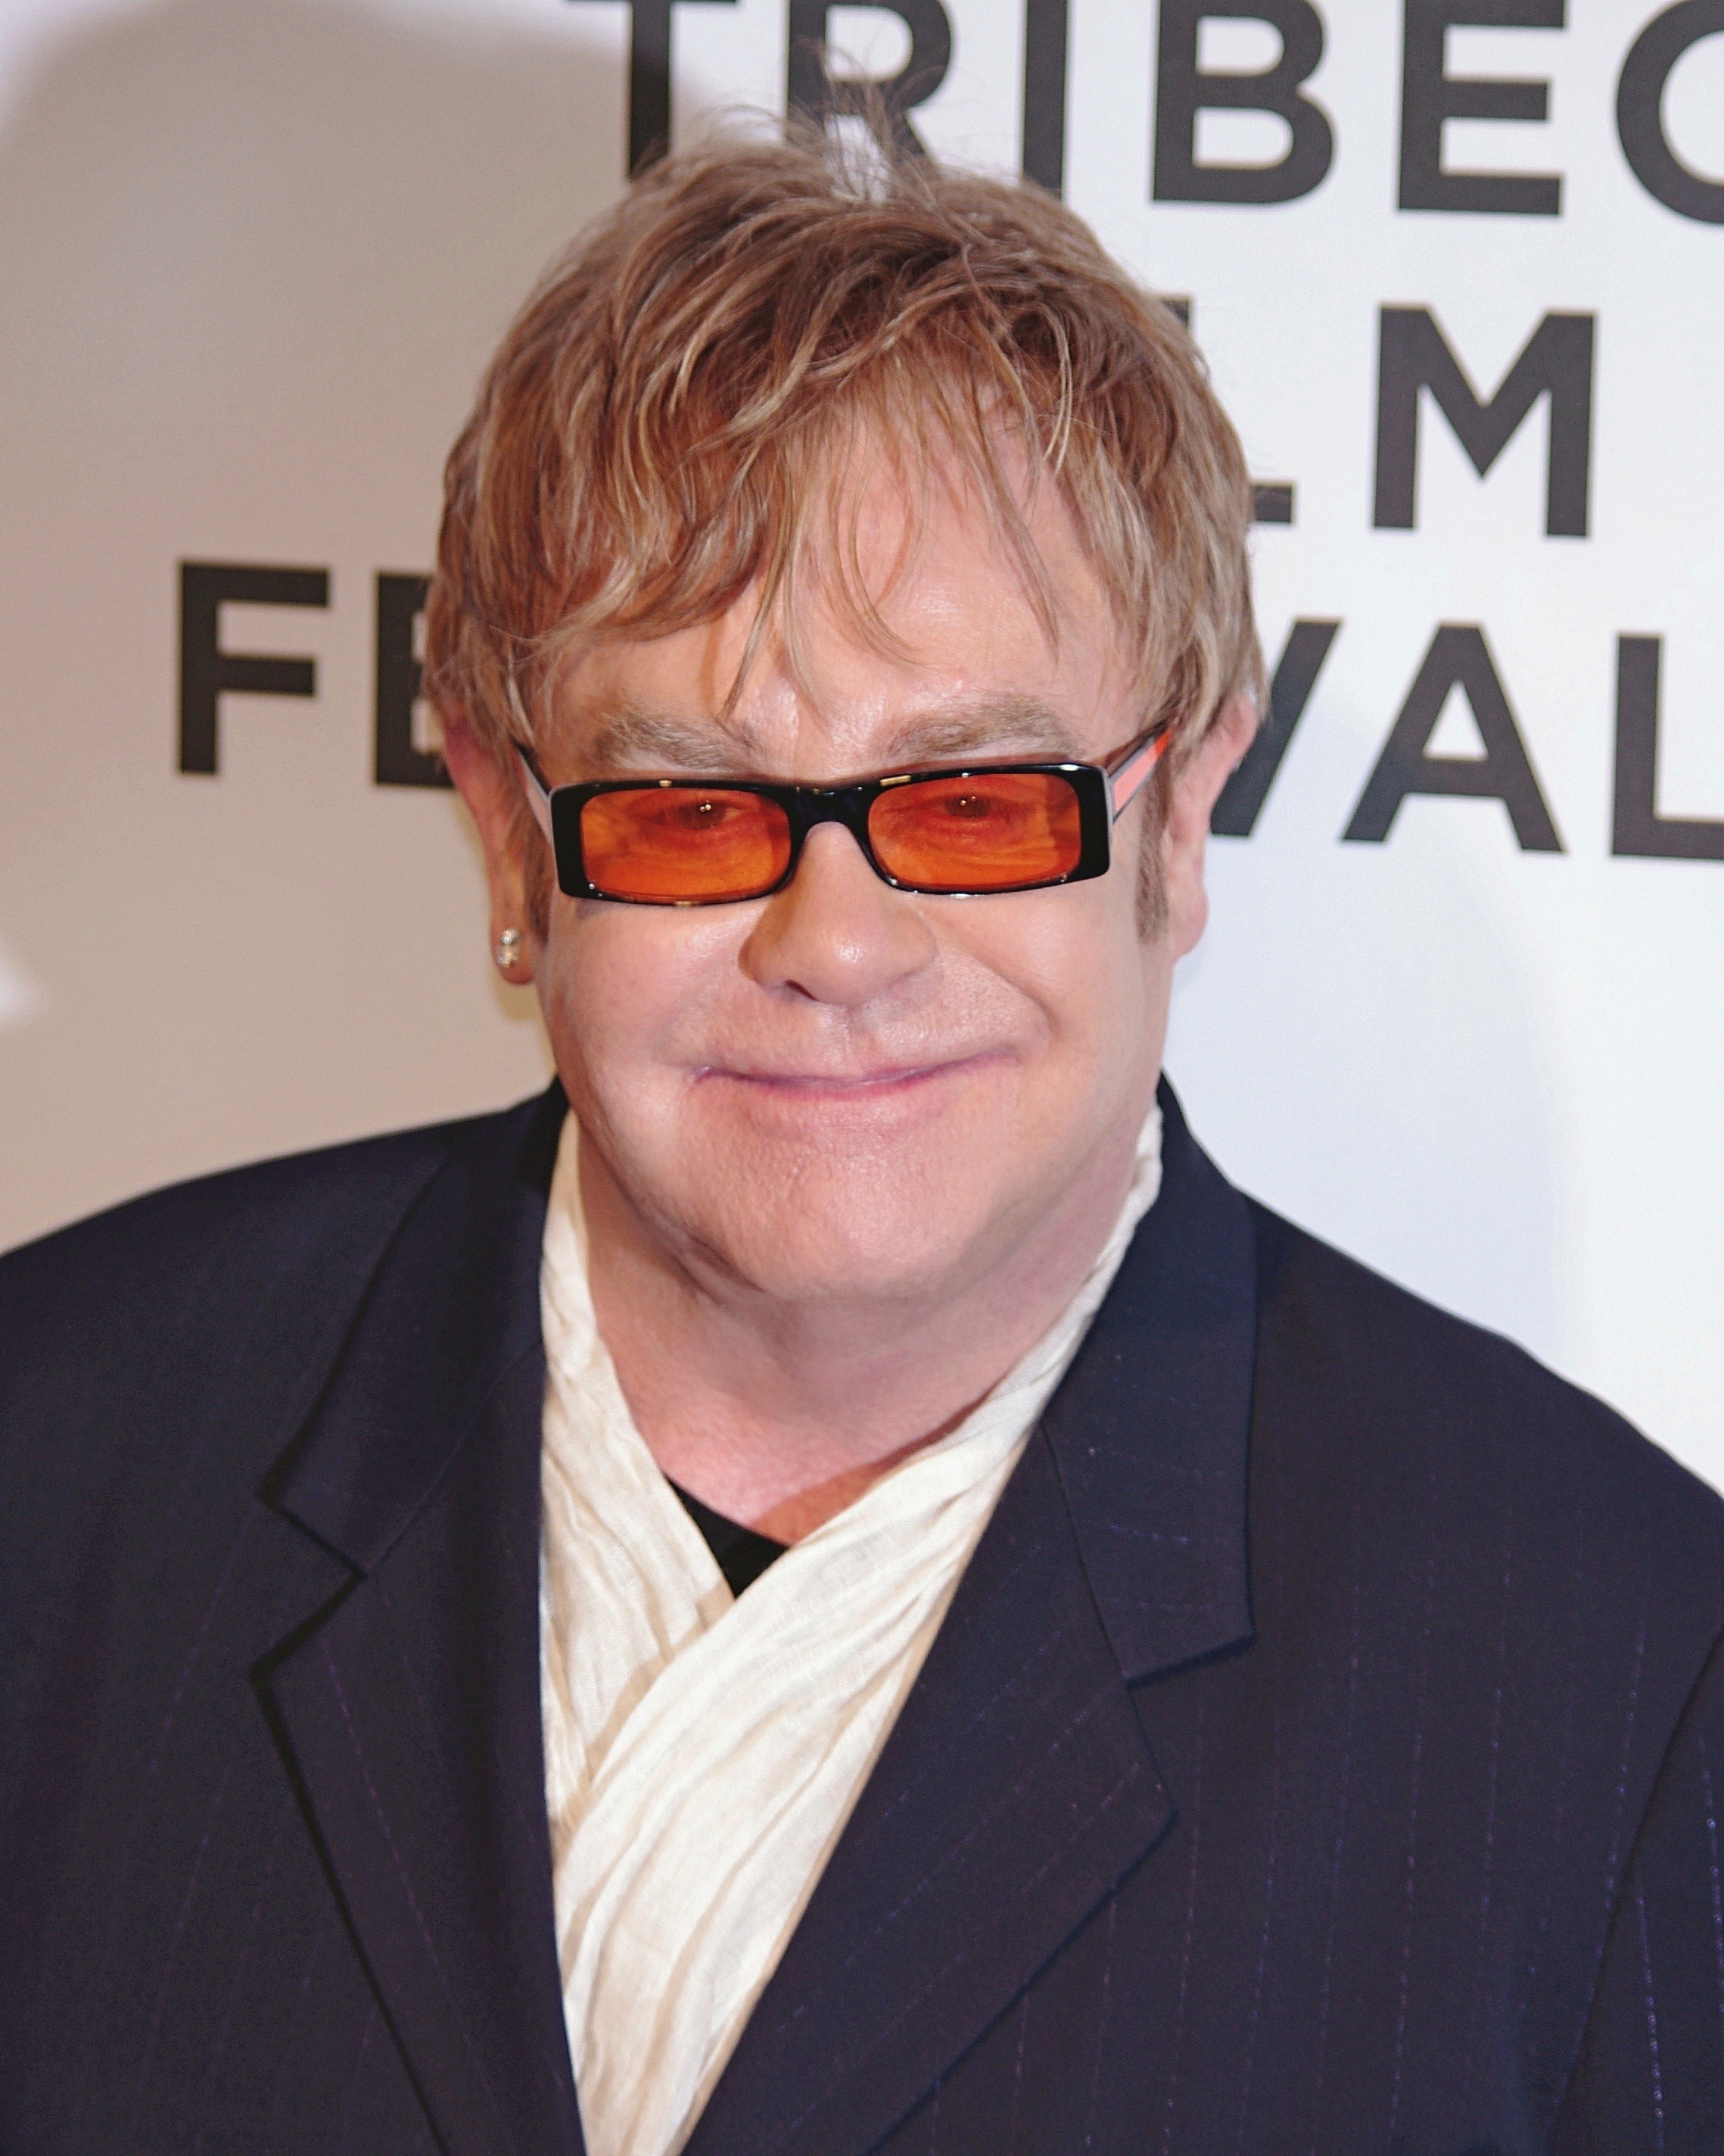 Elton John is the kindest, most interesting, warm man: Actor Taron Egerton